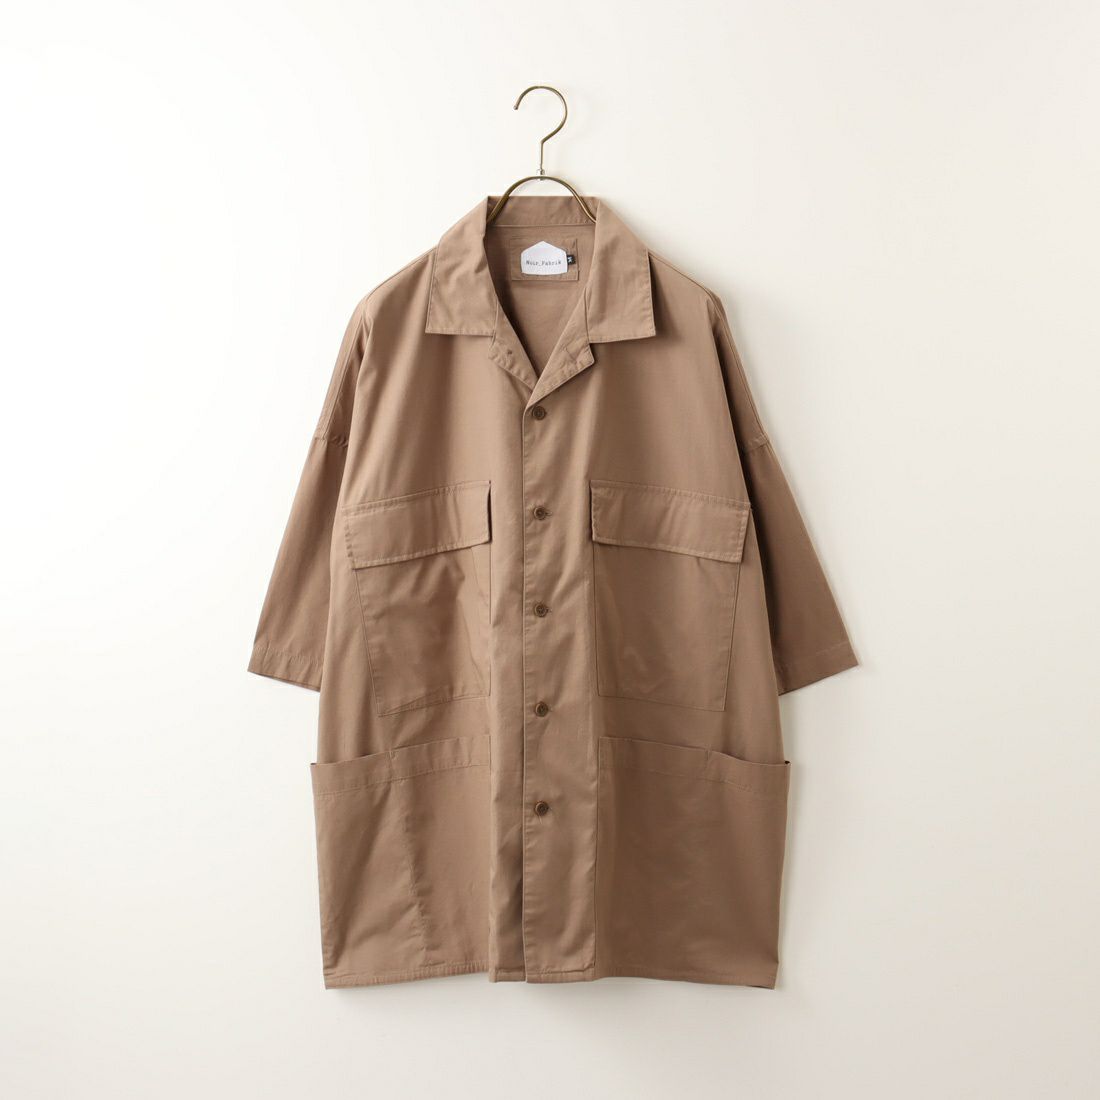 Noir Fabrik [ヌワールファブリック] ショートスリーブガーデニングシャツ [BPP480] BEIGE